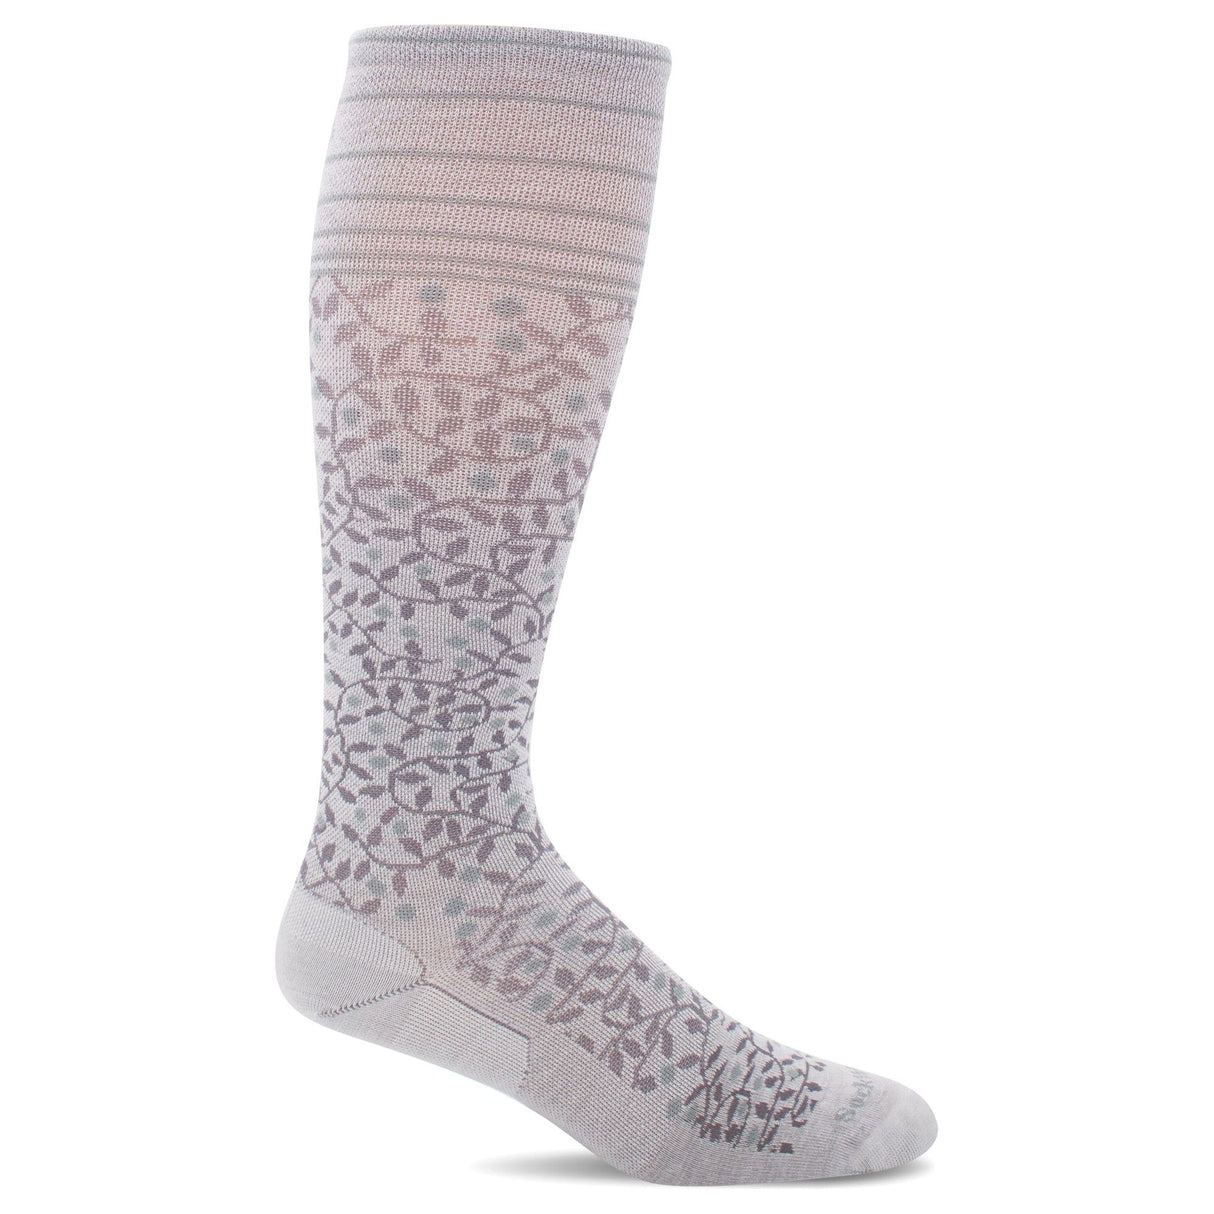 Sockwell Womens New Leaf Firm Compression Knee High Socks  -  Small/Medium / Natural